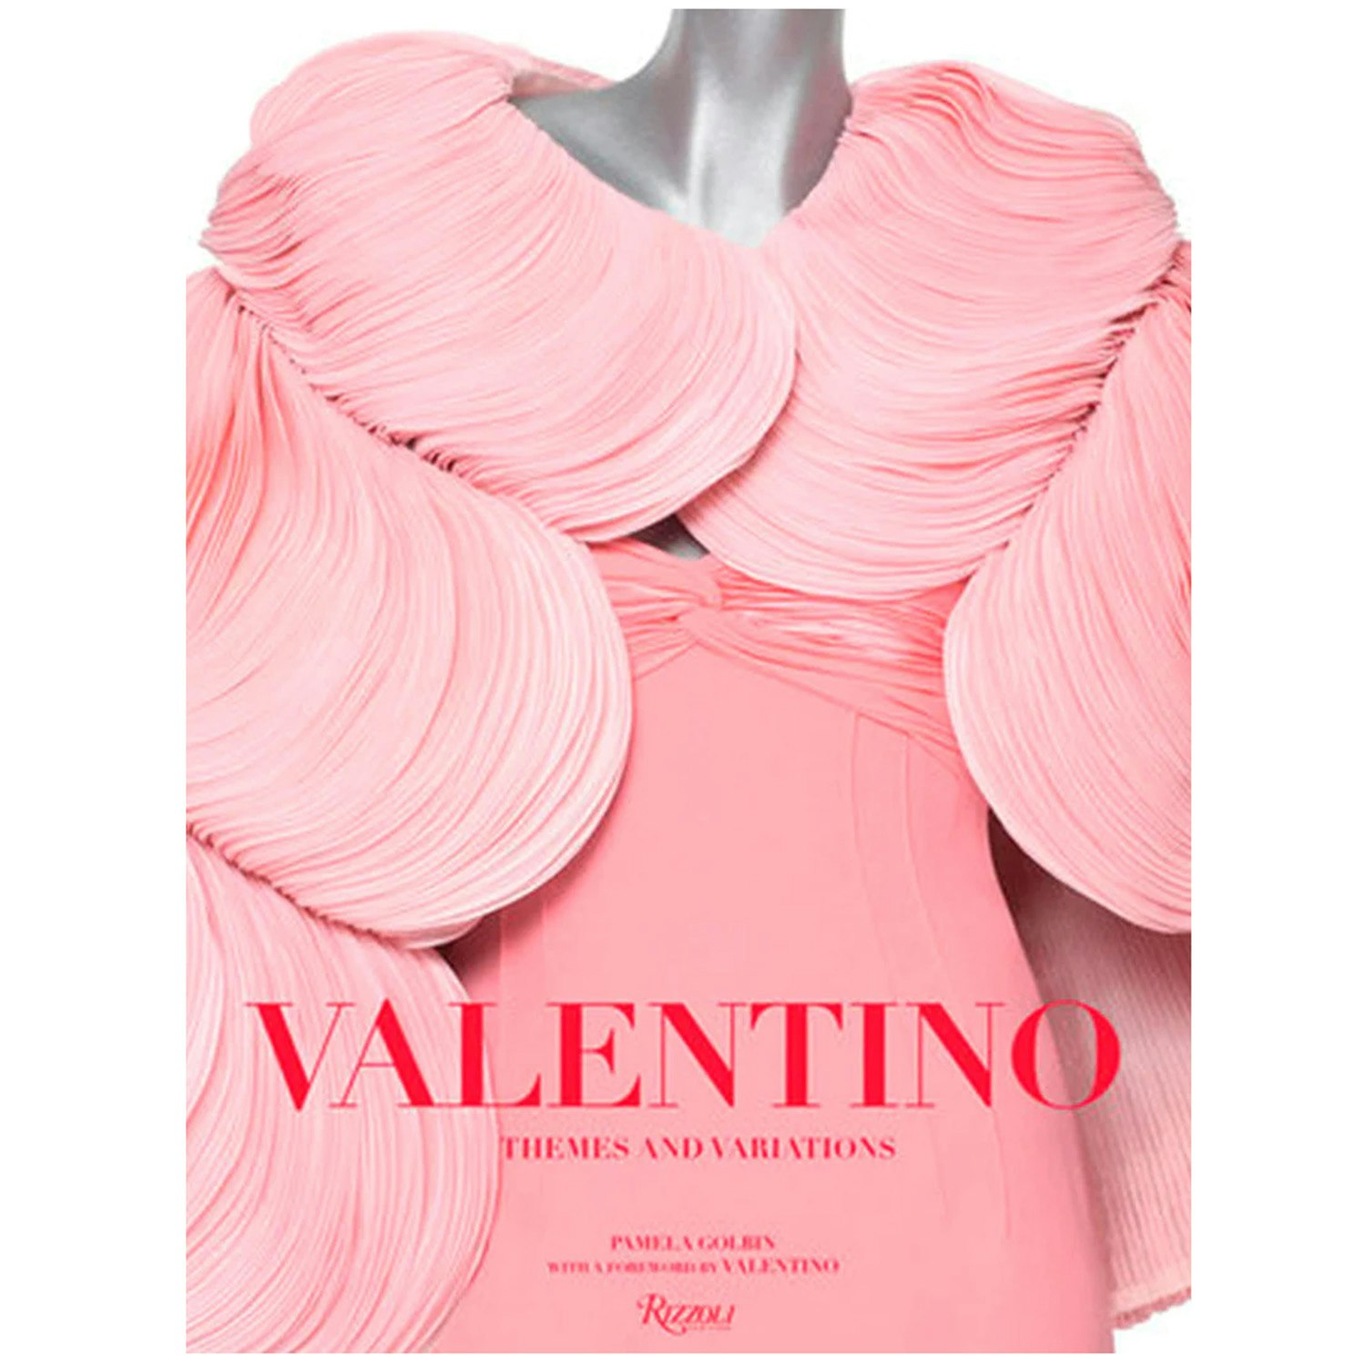 Valentino: Themes and Variations Bog